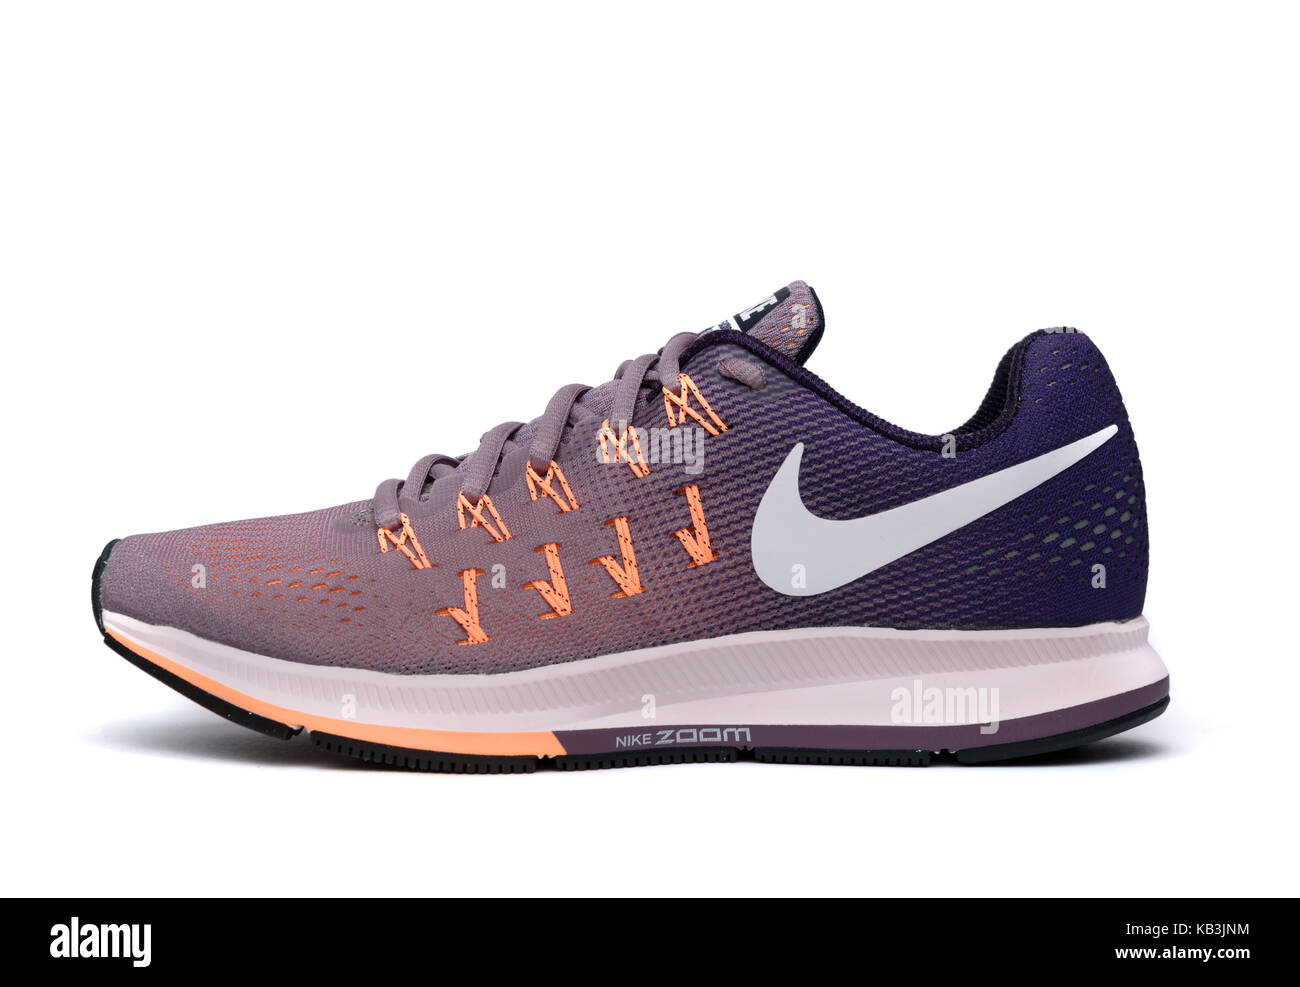 Viola e arancione Nike Pegasus 33 running shoe isolato su sfondo bianco  Foto stock - Alamy